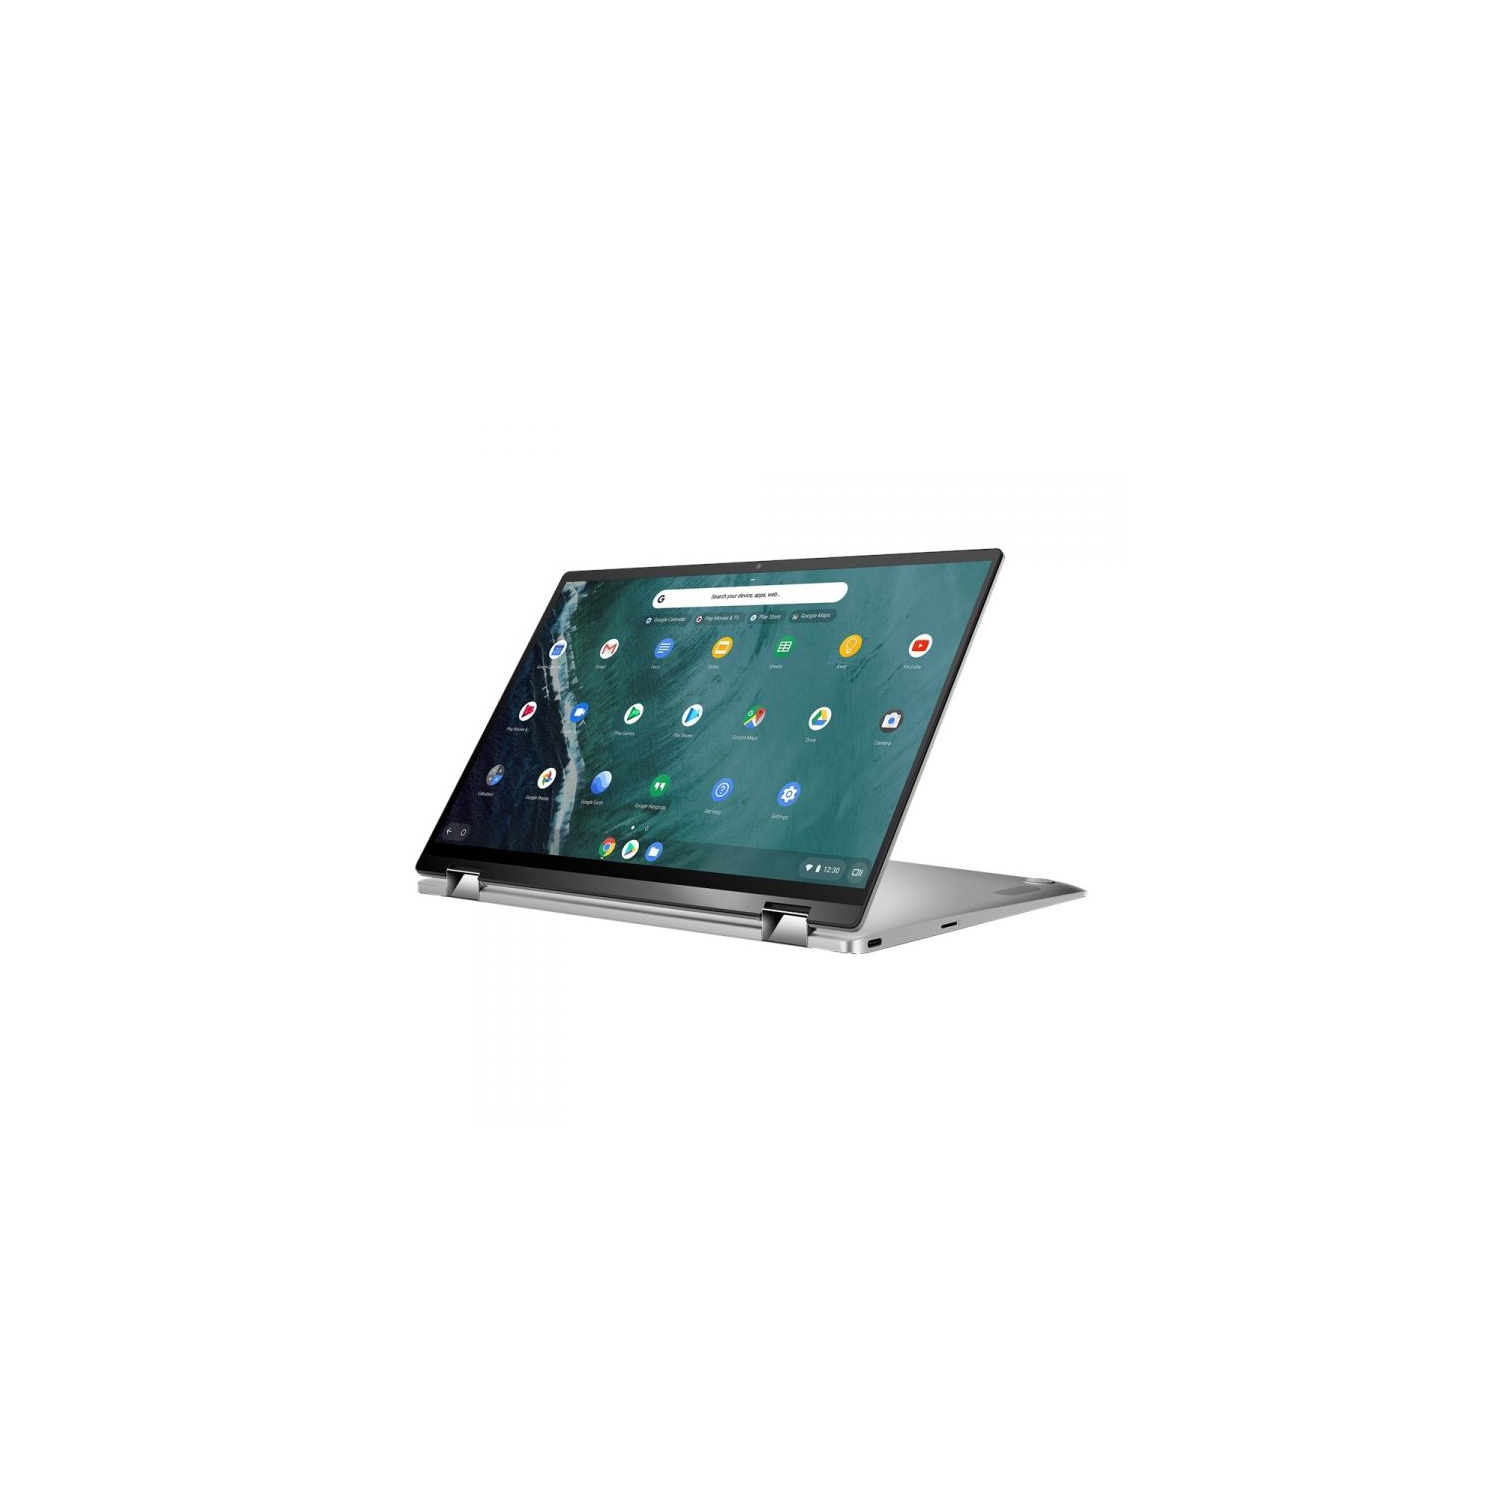 Asus Chromebook 14" 2-in-1 Laptop - Silver (Intel Core m3-8100Y/64 GB SSD/4 GB RAM/Chrome OS) - (C434TA-C1-CA)